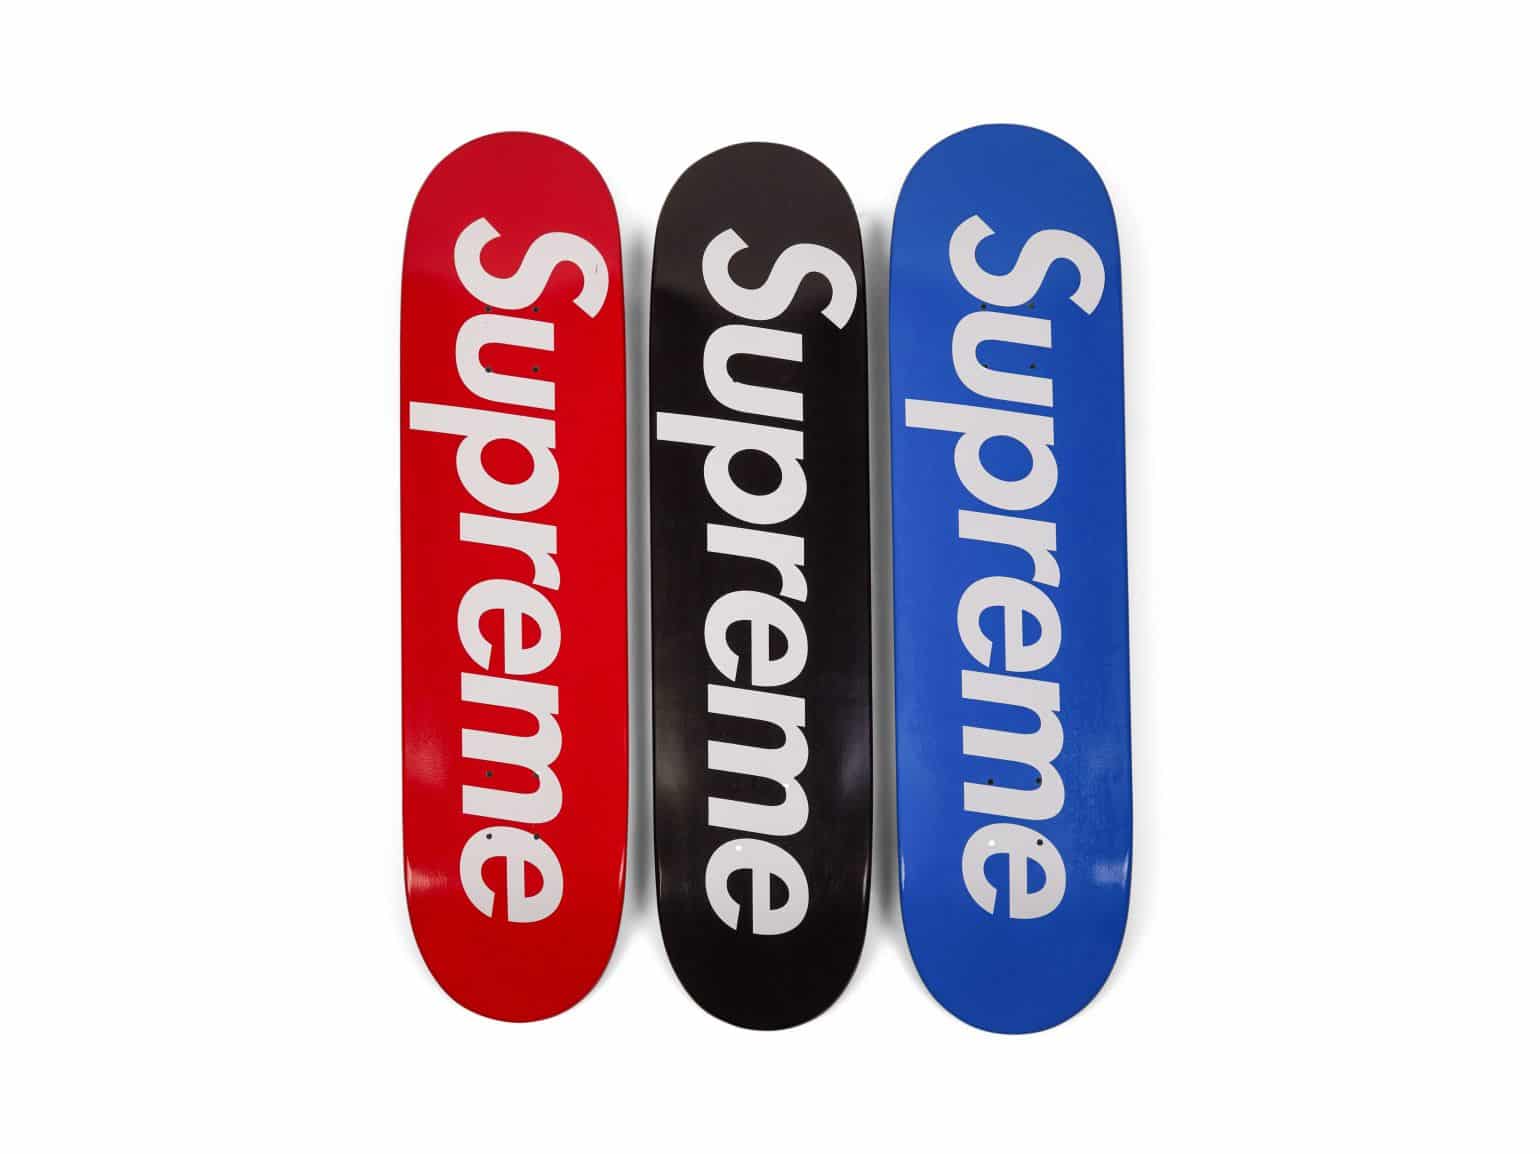 Sold at Auction: Supreme x Louis Vuitton Boite Skateboard Trunk